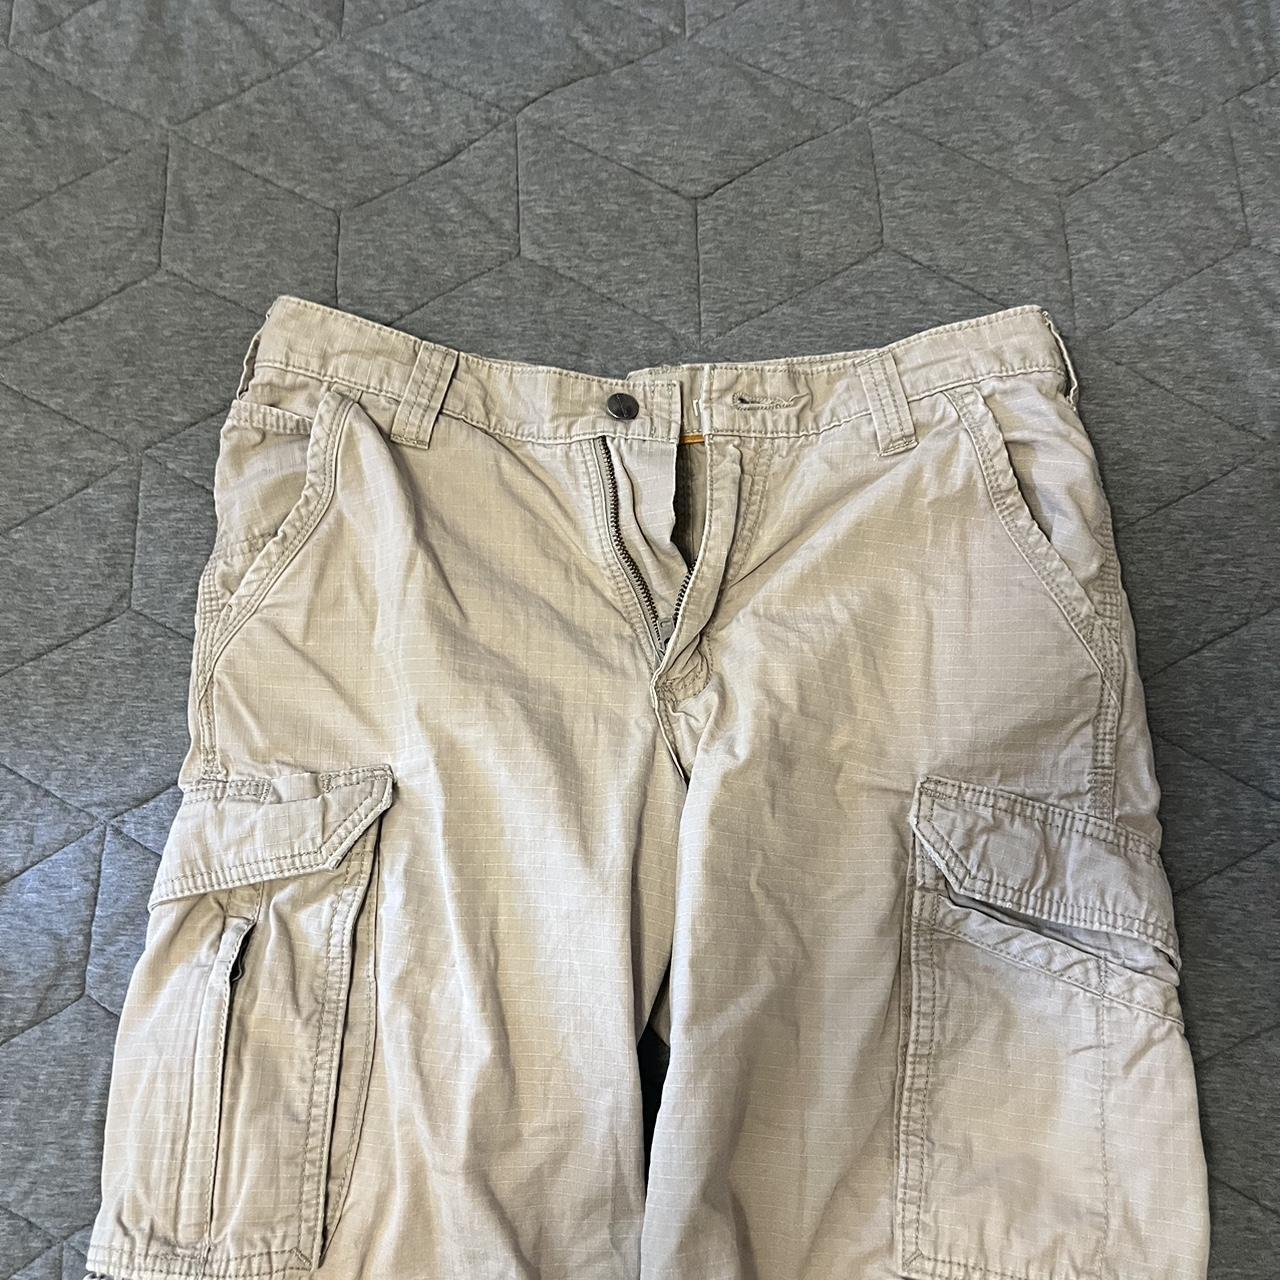 Carhartt cargo shorts - Depop